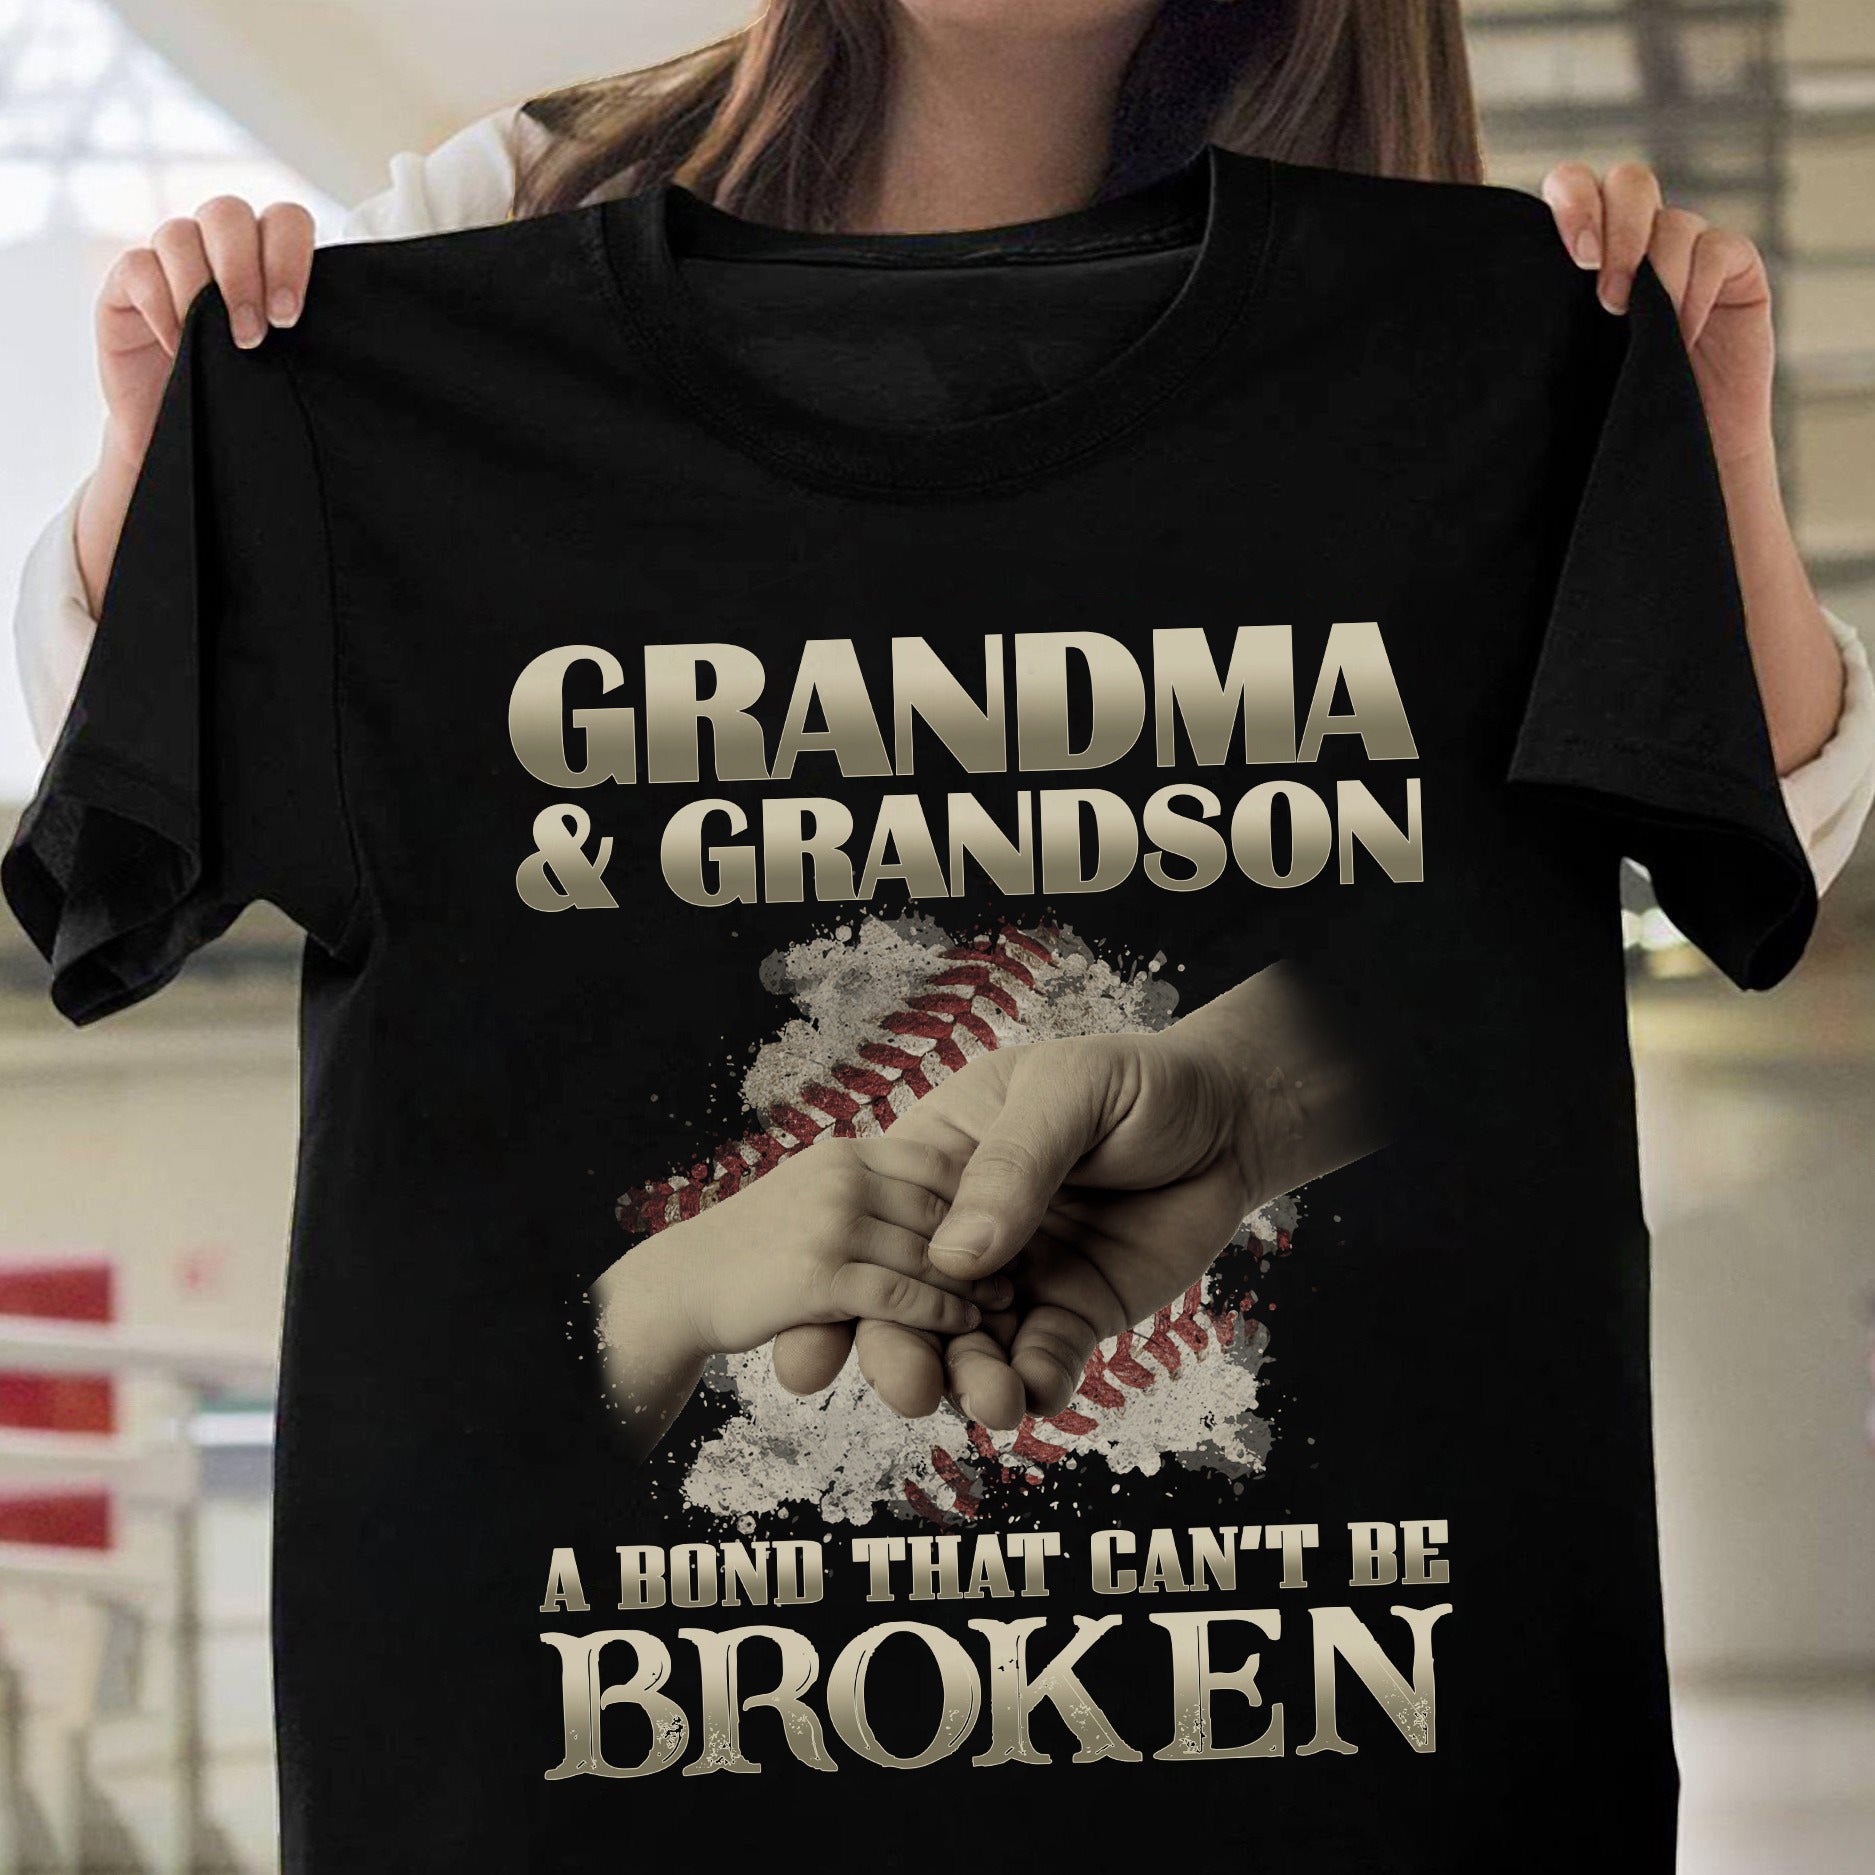 Baseball Nana Shirts, Grandma and Grandson a bond that can't be broken, Best Baseball Tee Shirt, Gifts For Baseball Lovers